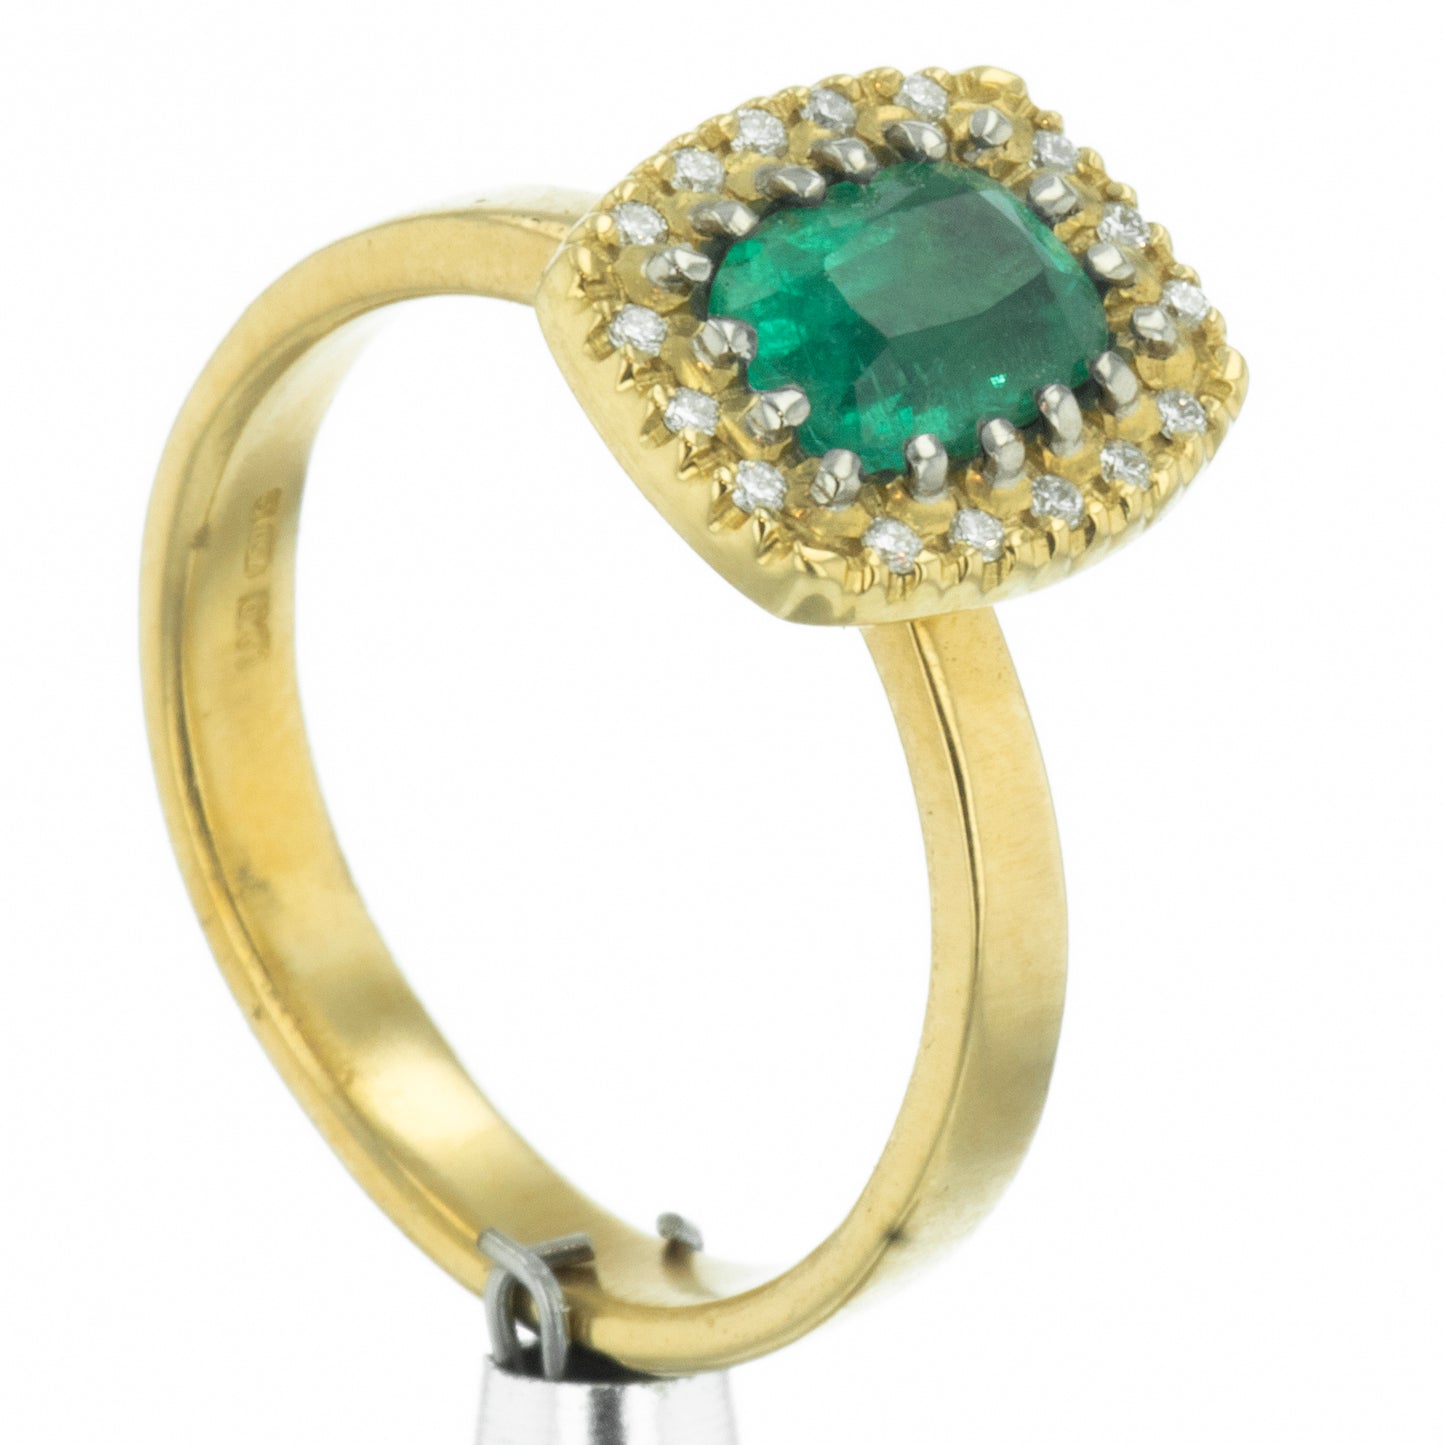 Green Emerald ring